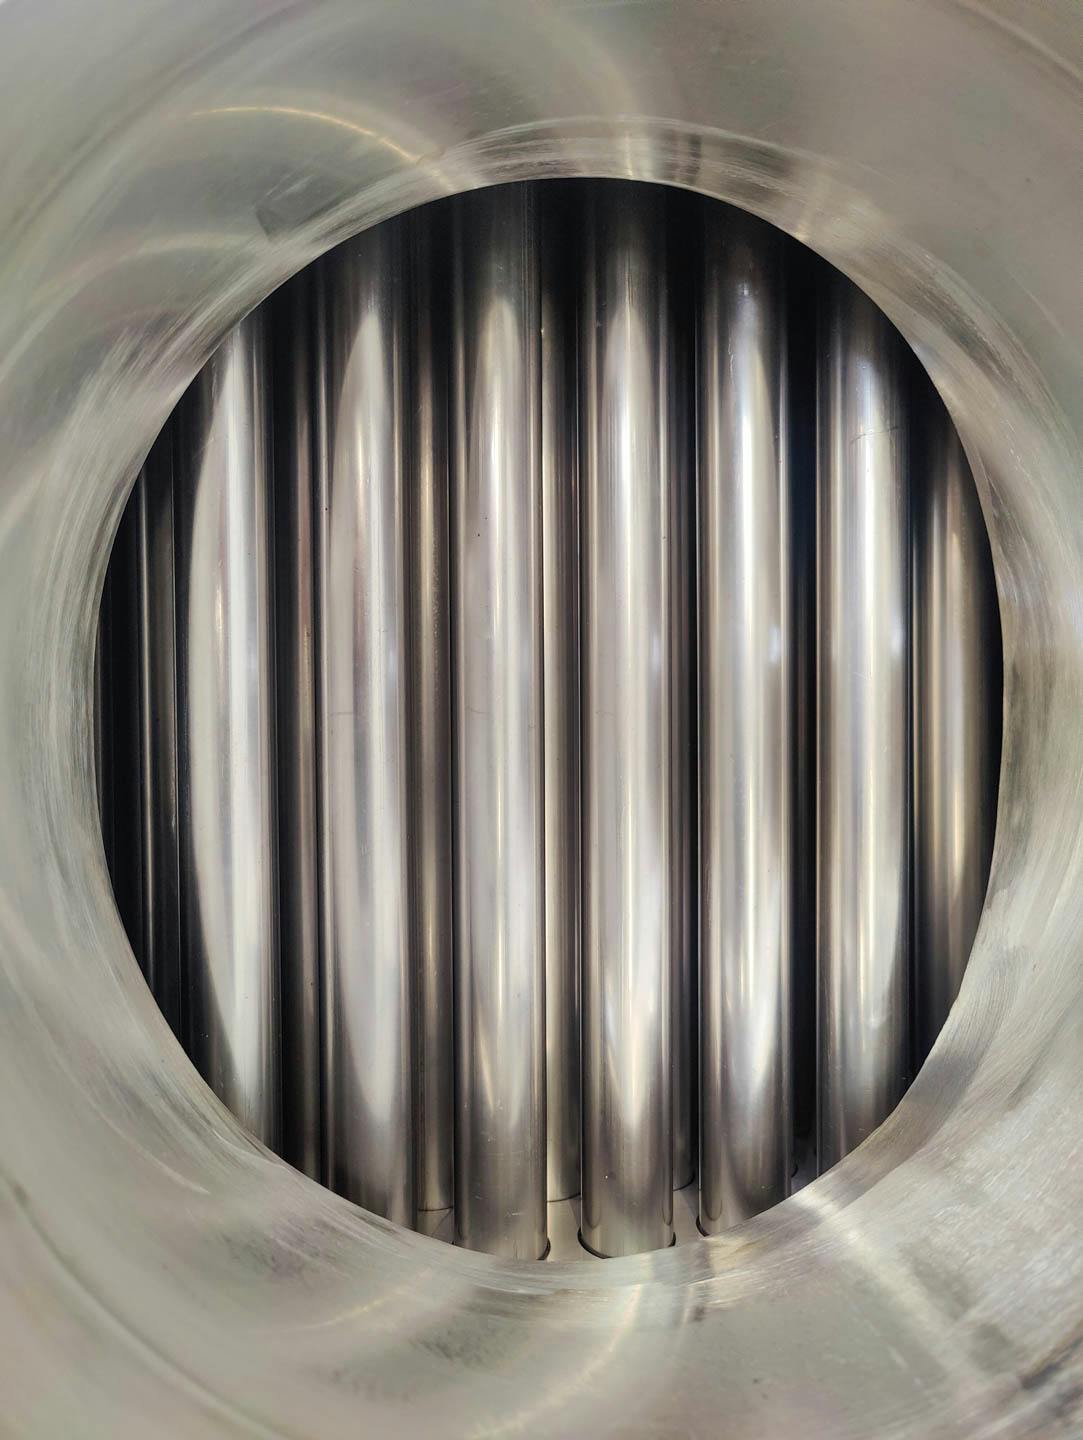 Kuehni NKL-g - Shell and tube heat exchanger - image 4